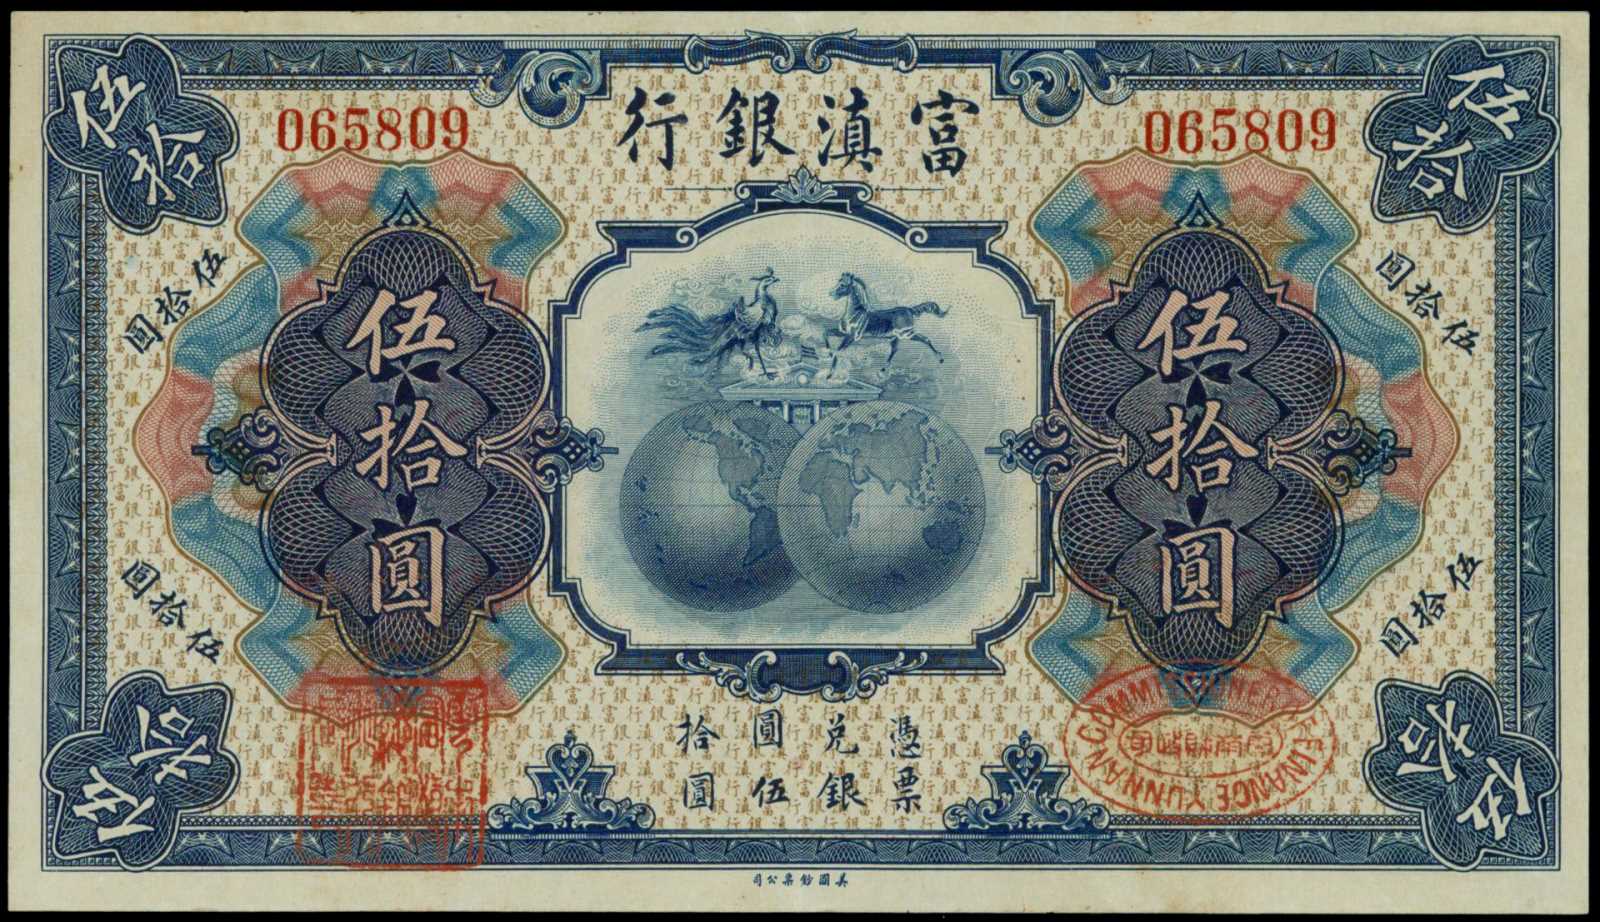 The Fu-tien Bank банкноты.